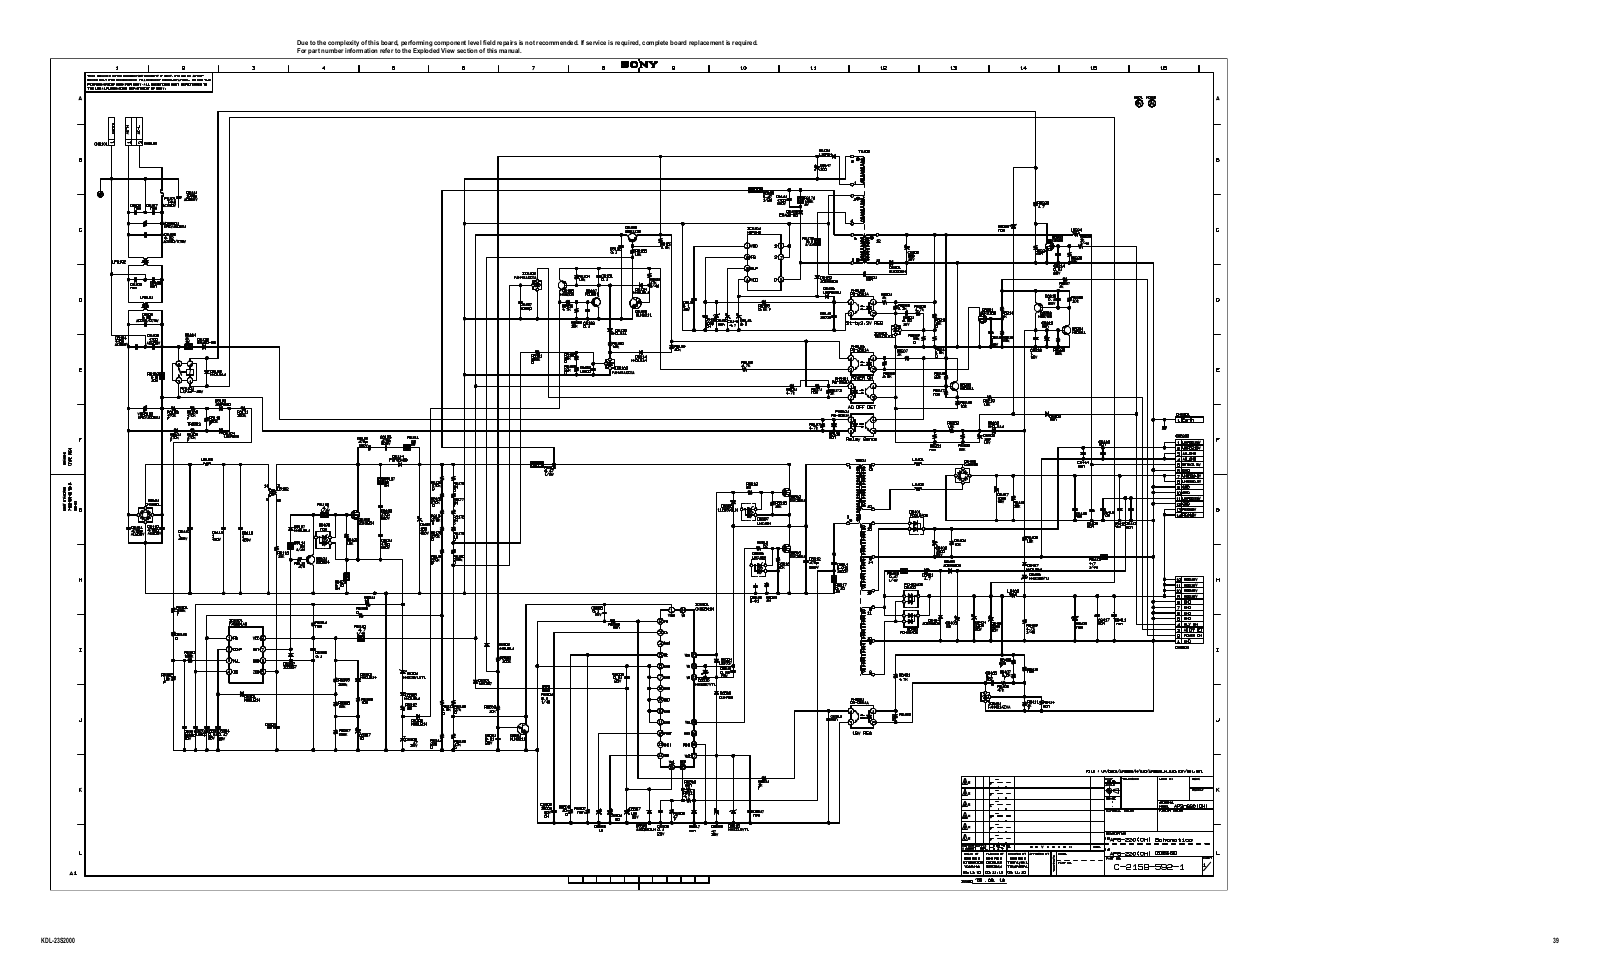 Sony APS-220 schematic